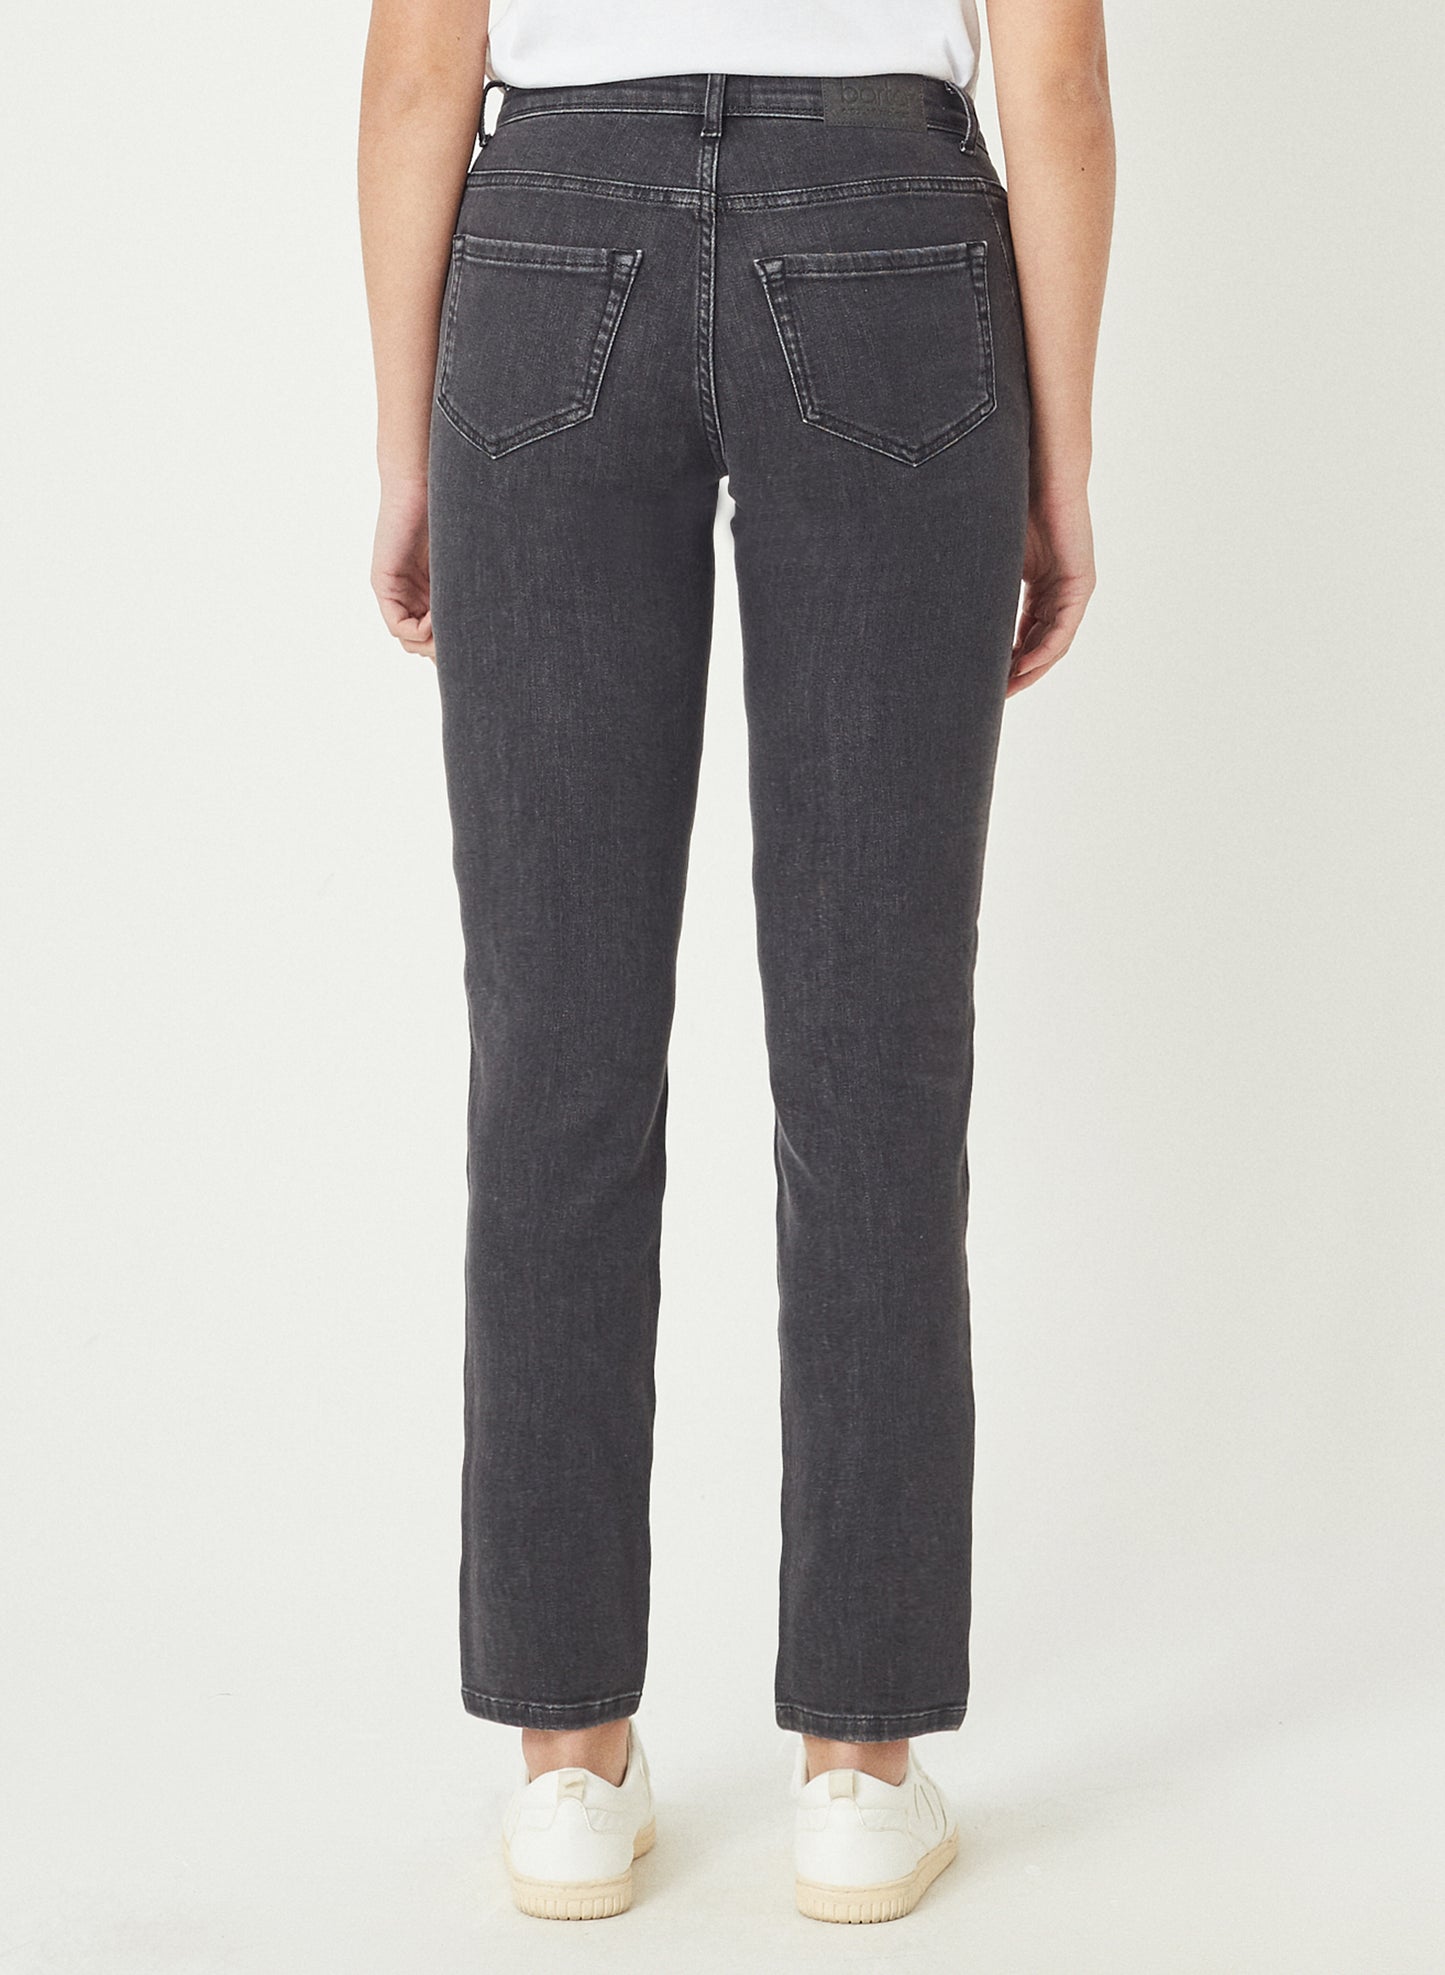 HANNA - Regular Fit Denim Jeans Pant - Black Denim